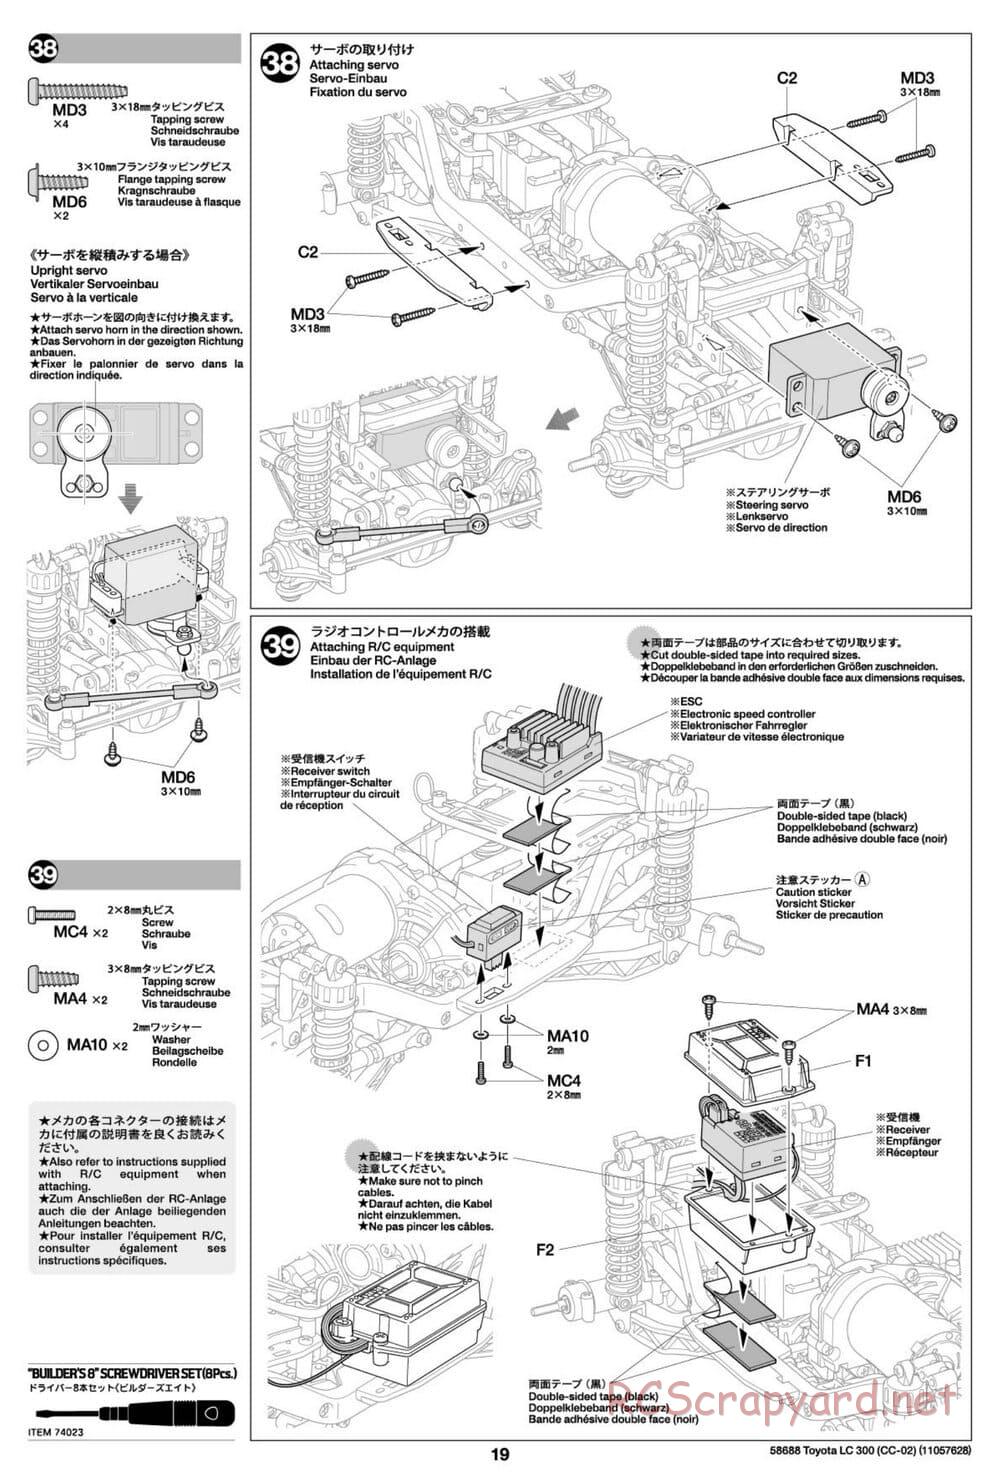 Tamiya - Toyota Land Cruiser 300 - CC-02 Chassis - Manual - Page 19